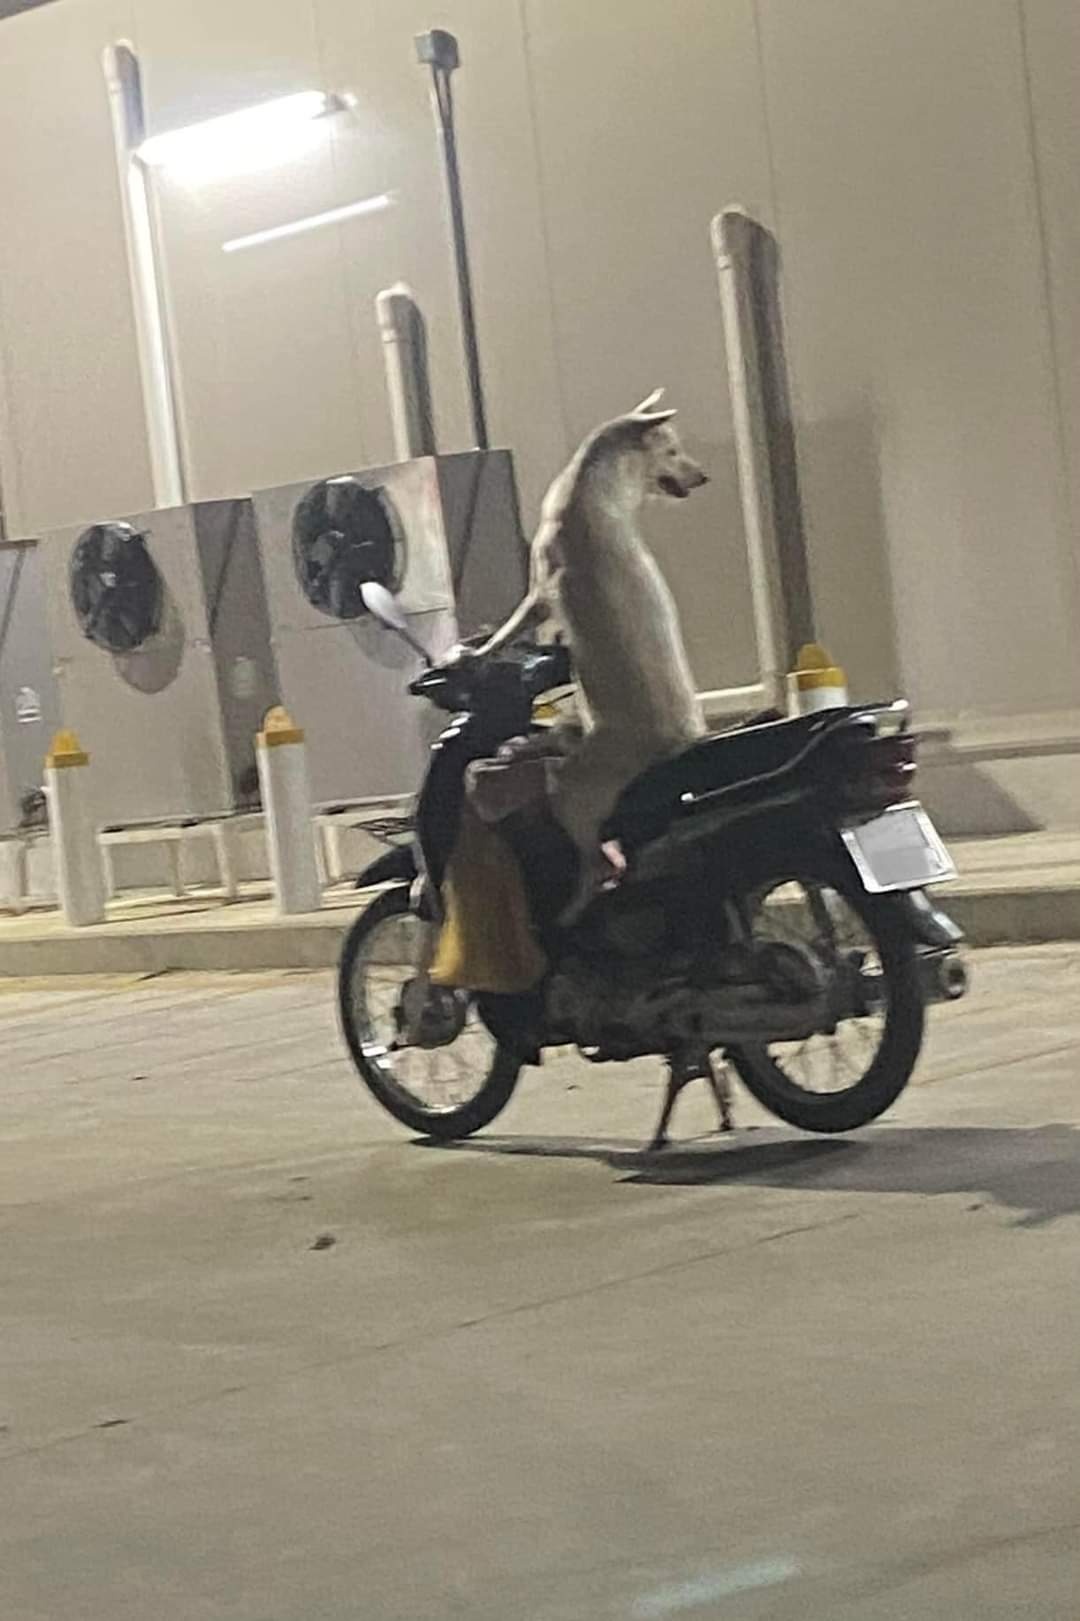 dog riding on motorcycle